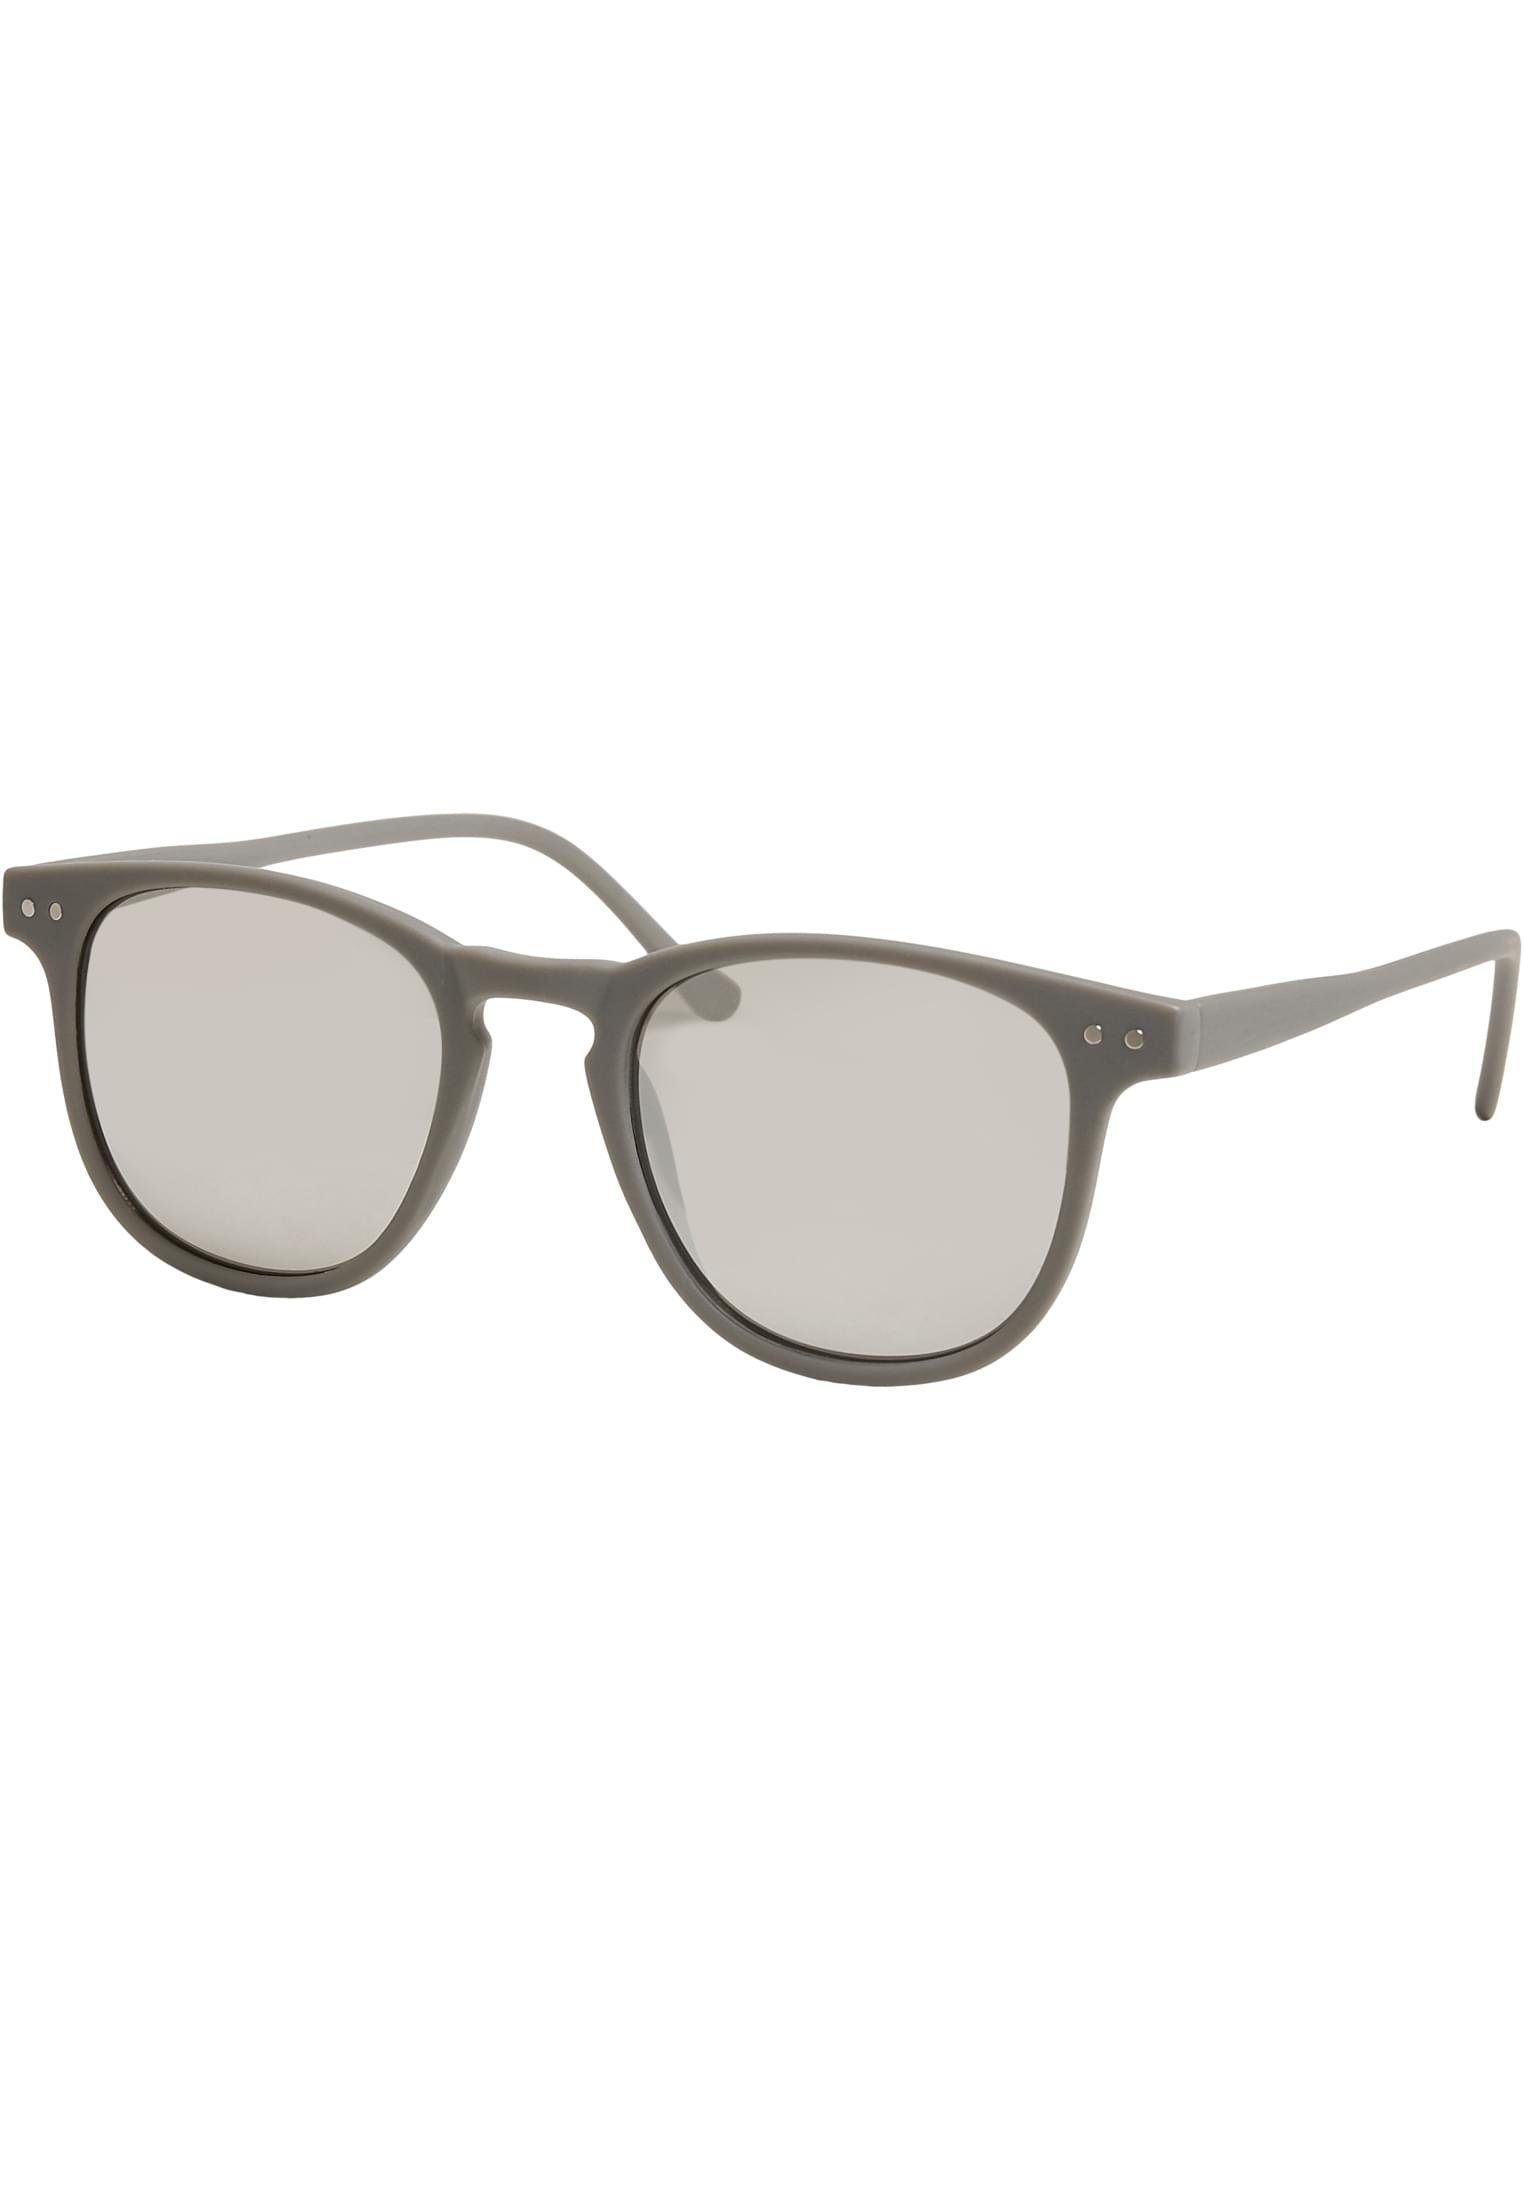 Sunglasses Arthur Chain grey/silver URBAN Sonnenbrille Unisex with CLASSICS